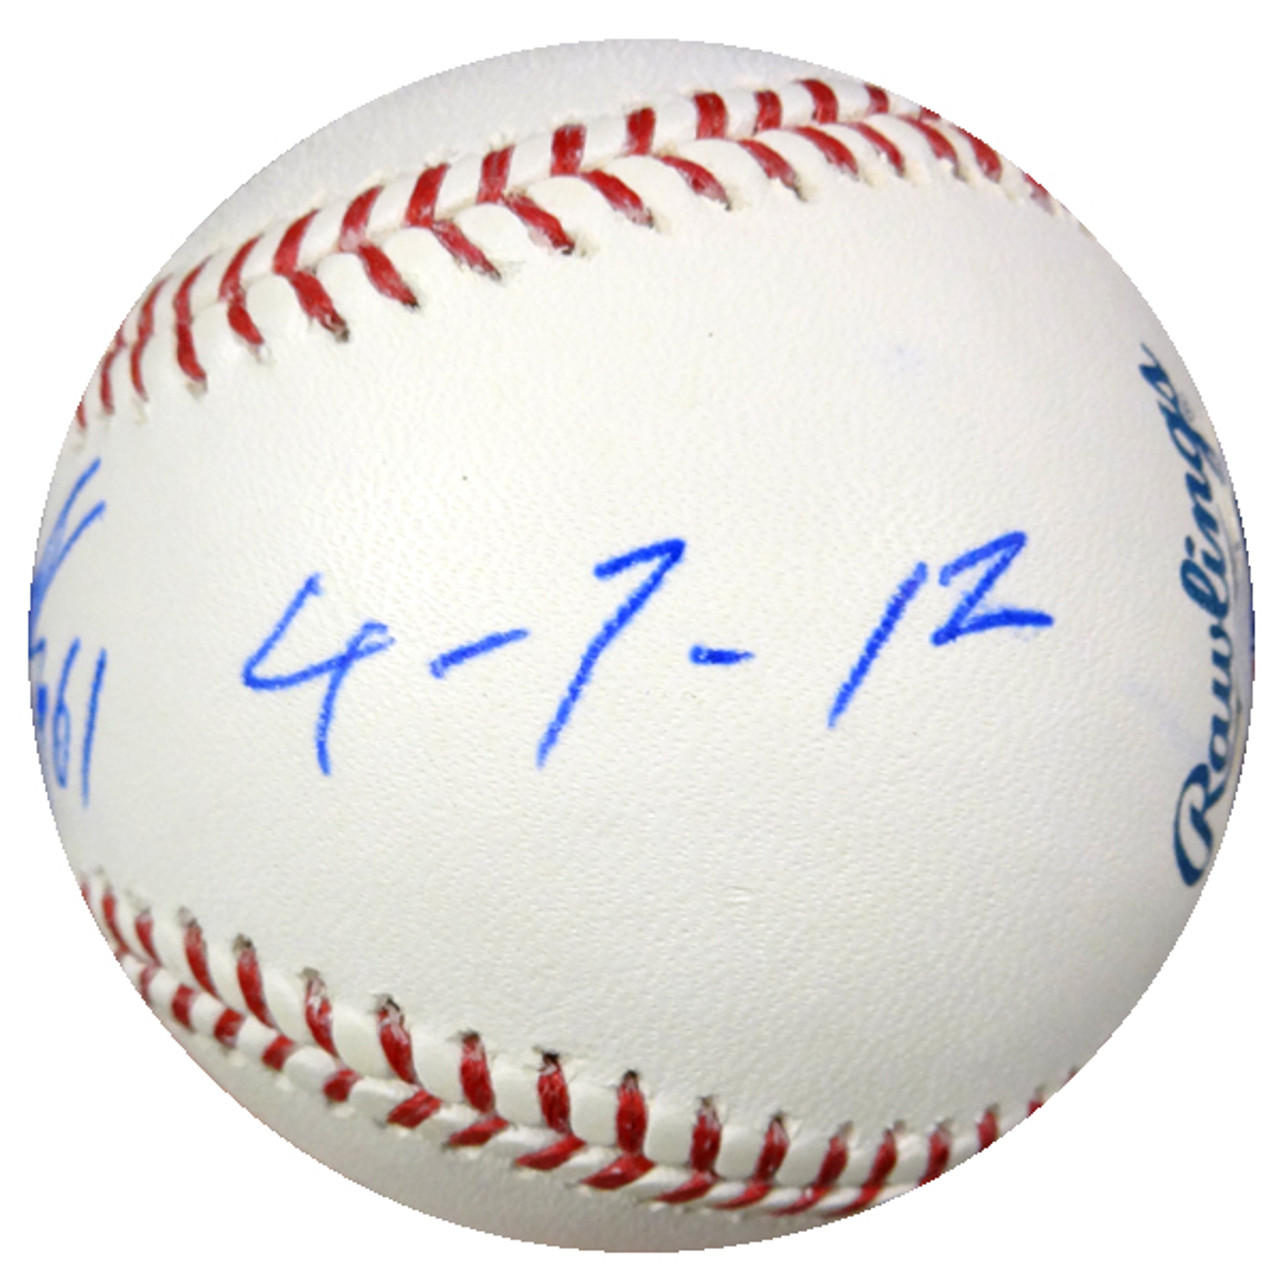 Munenori Kawasaki Autographed Official MLB Baseball Seattle Mariners,  Toronto Blue Jays 4-7-12 PSA/DNA #4A45141 - Mill Creek Sports